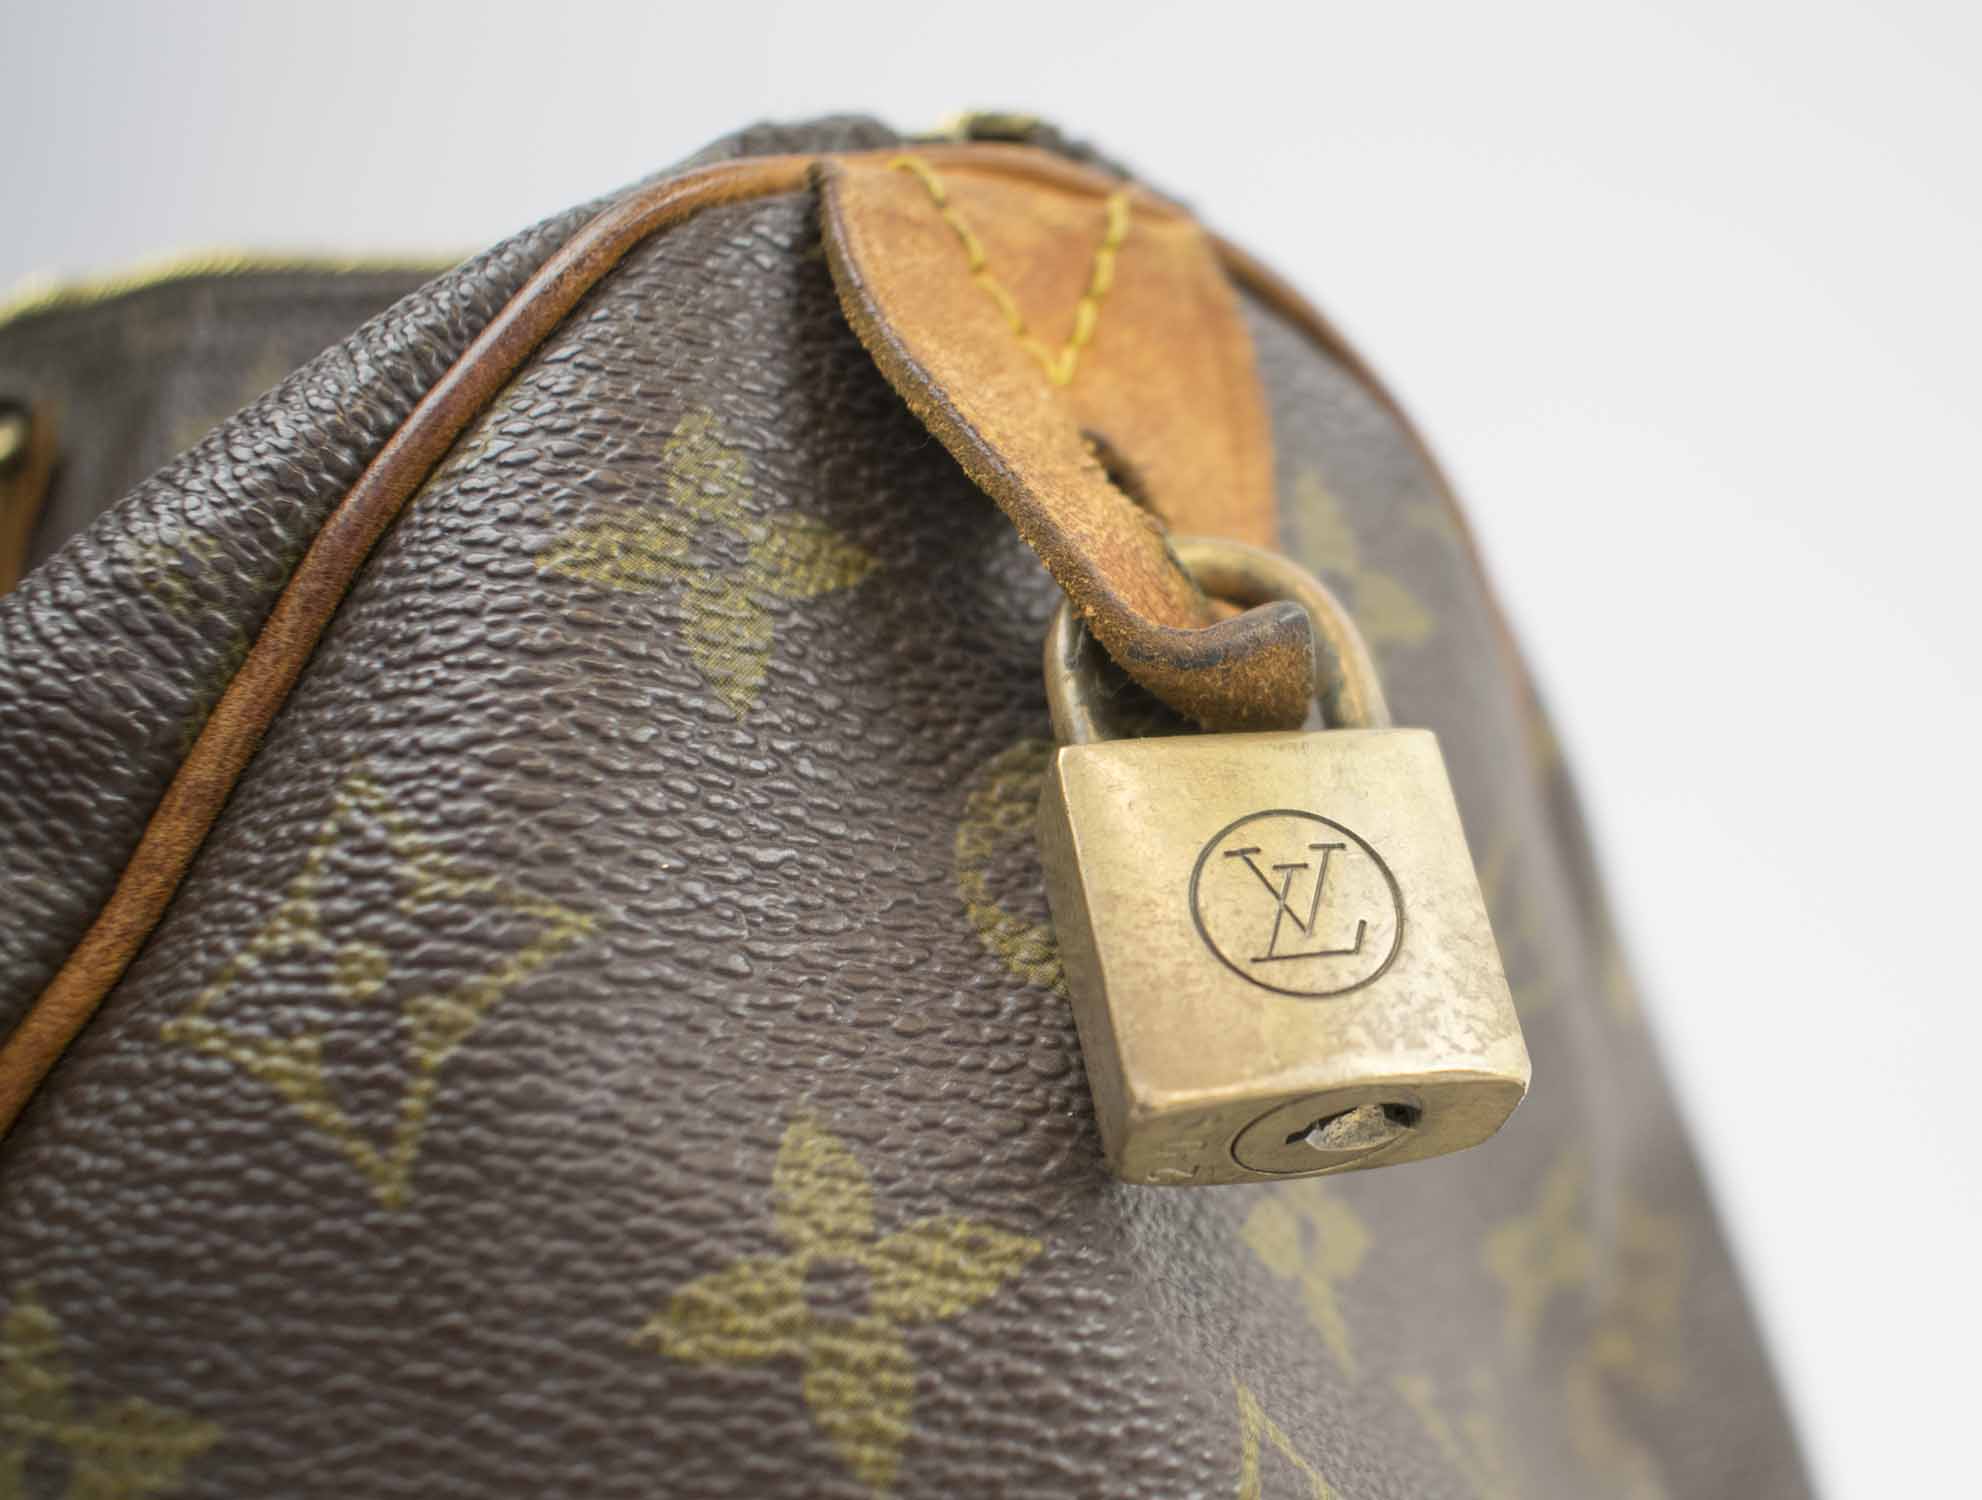 At Auction: LOUIS VUITTON Handbag SPEEDY 35.